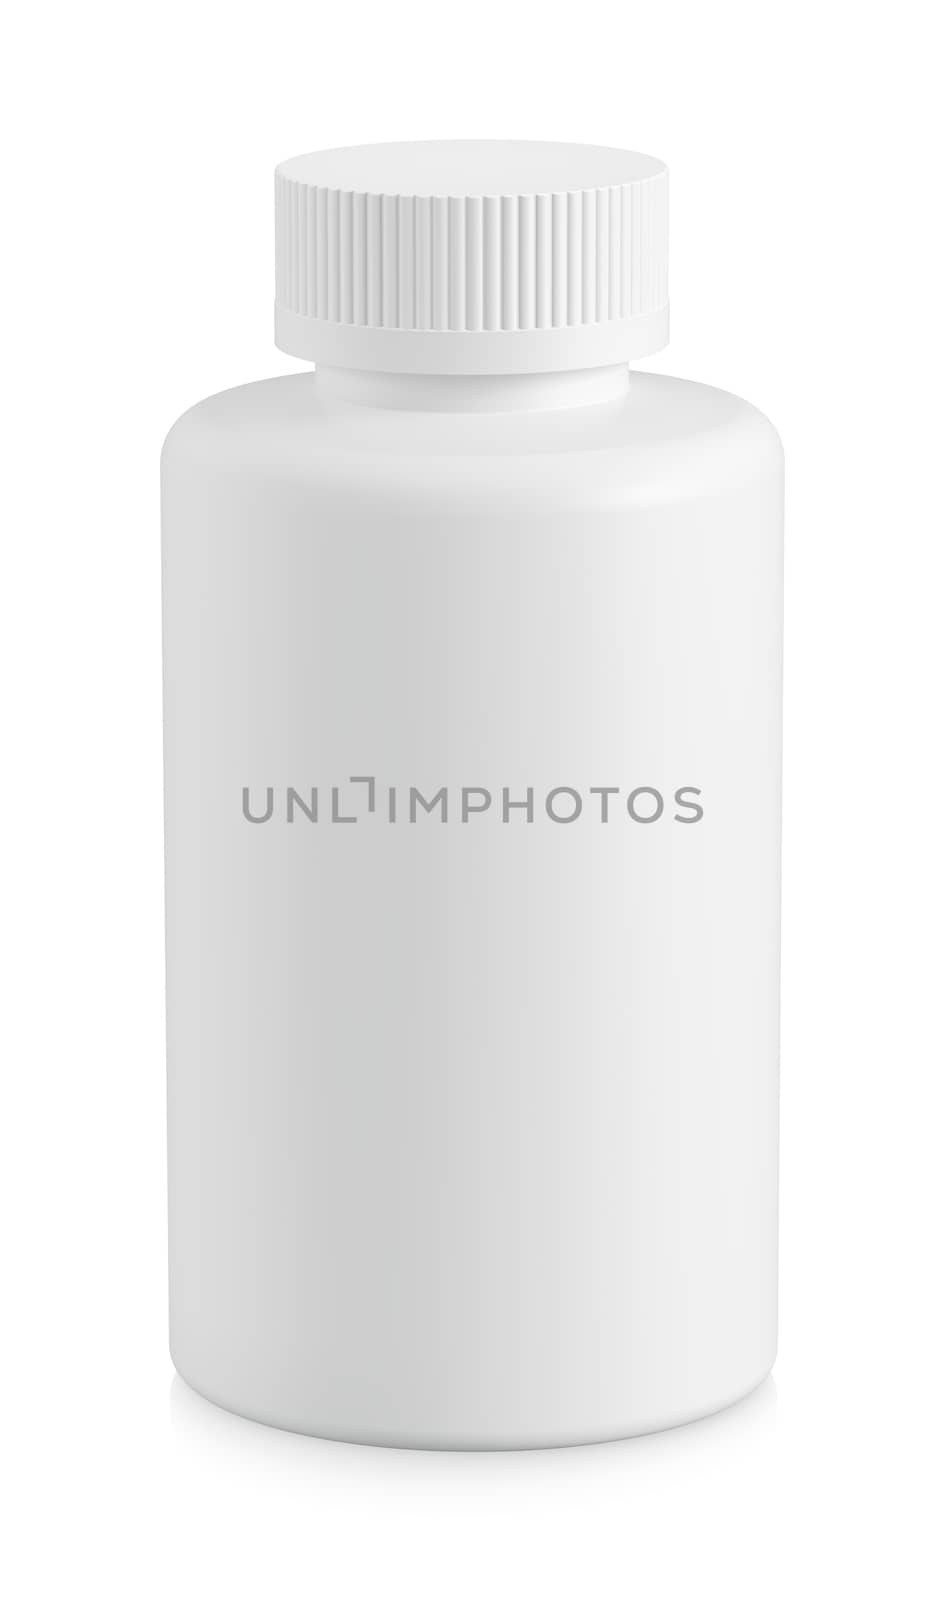 White plastic bottle cutout by vkstudio